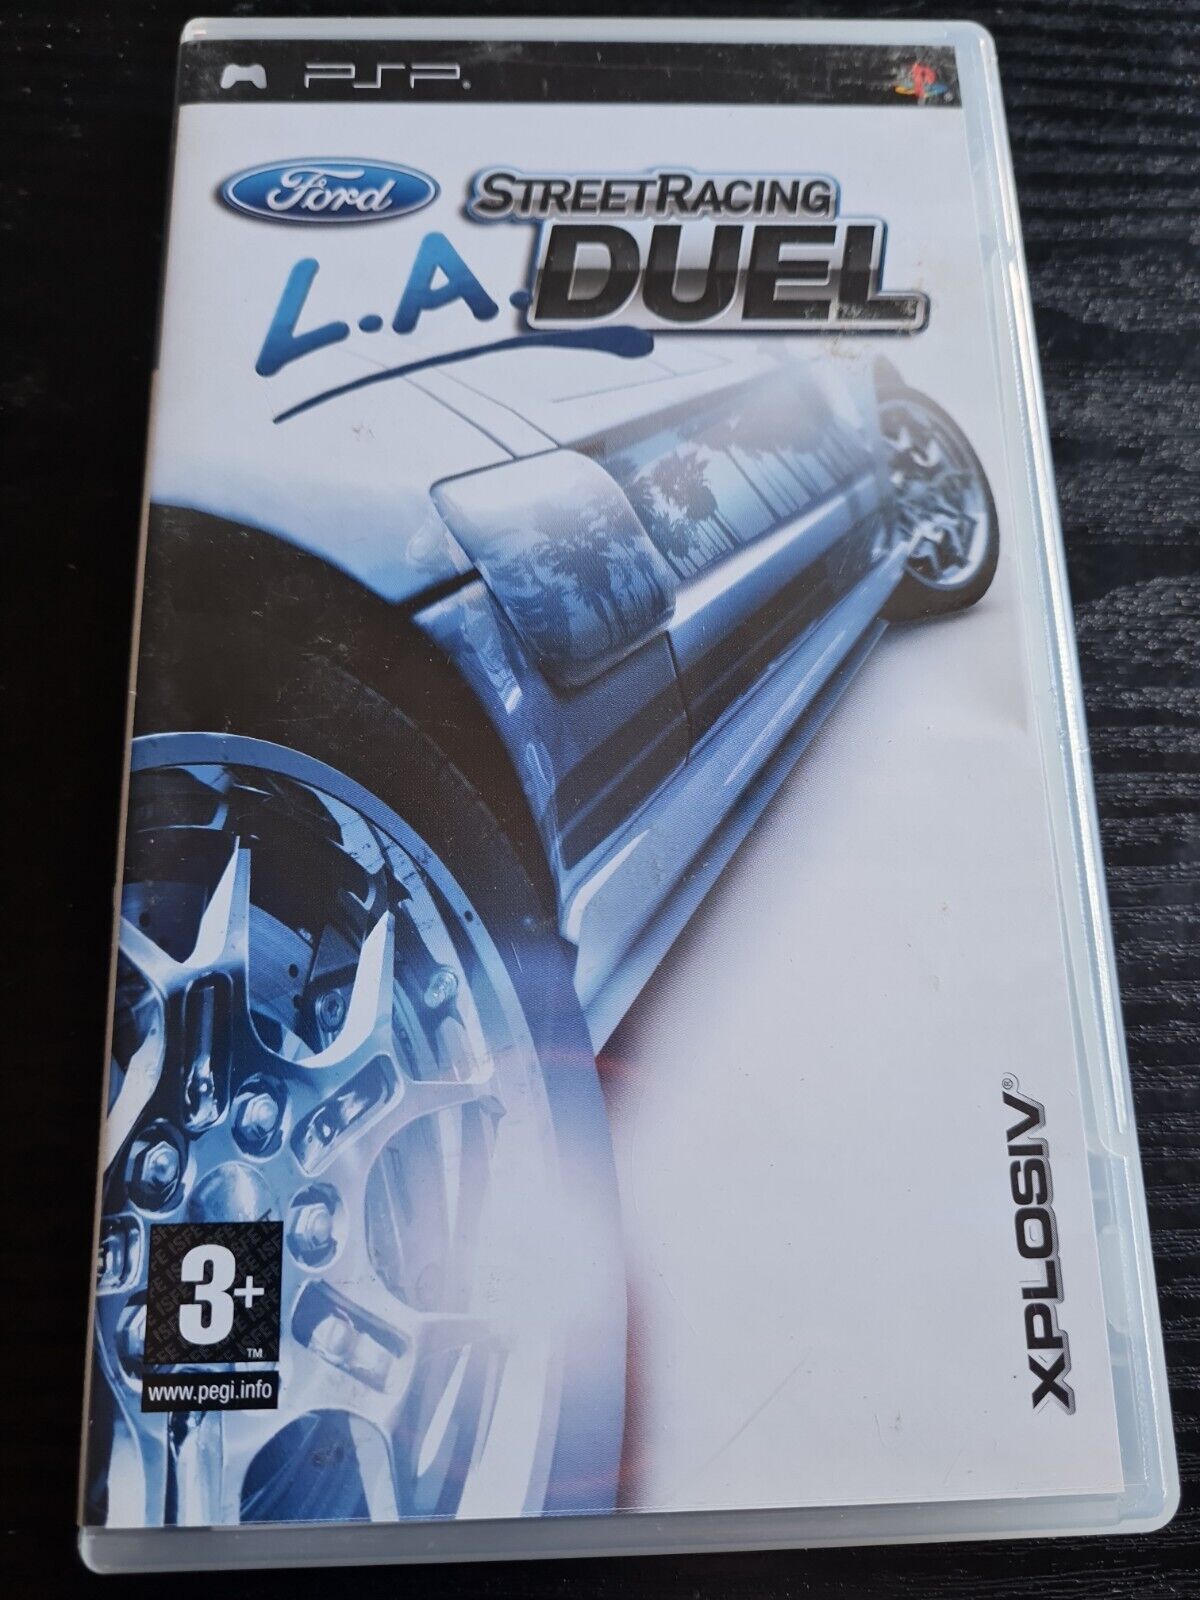 Ford Street Racing - L.A. Duel (Sony PSP) Inc Handbuch